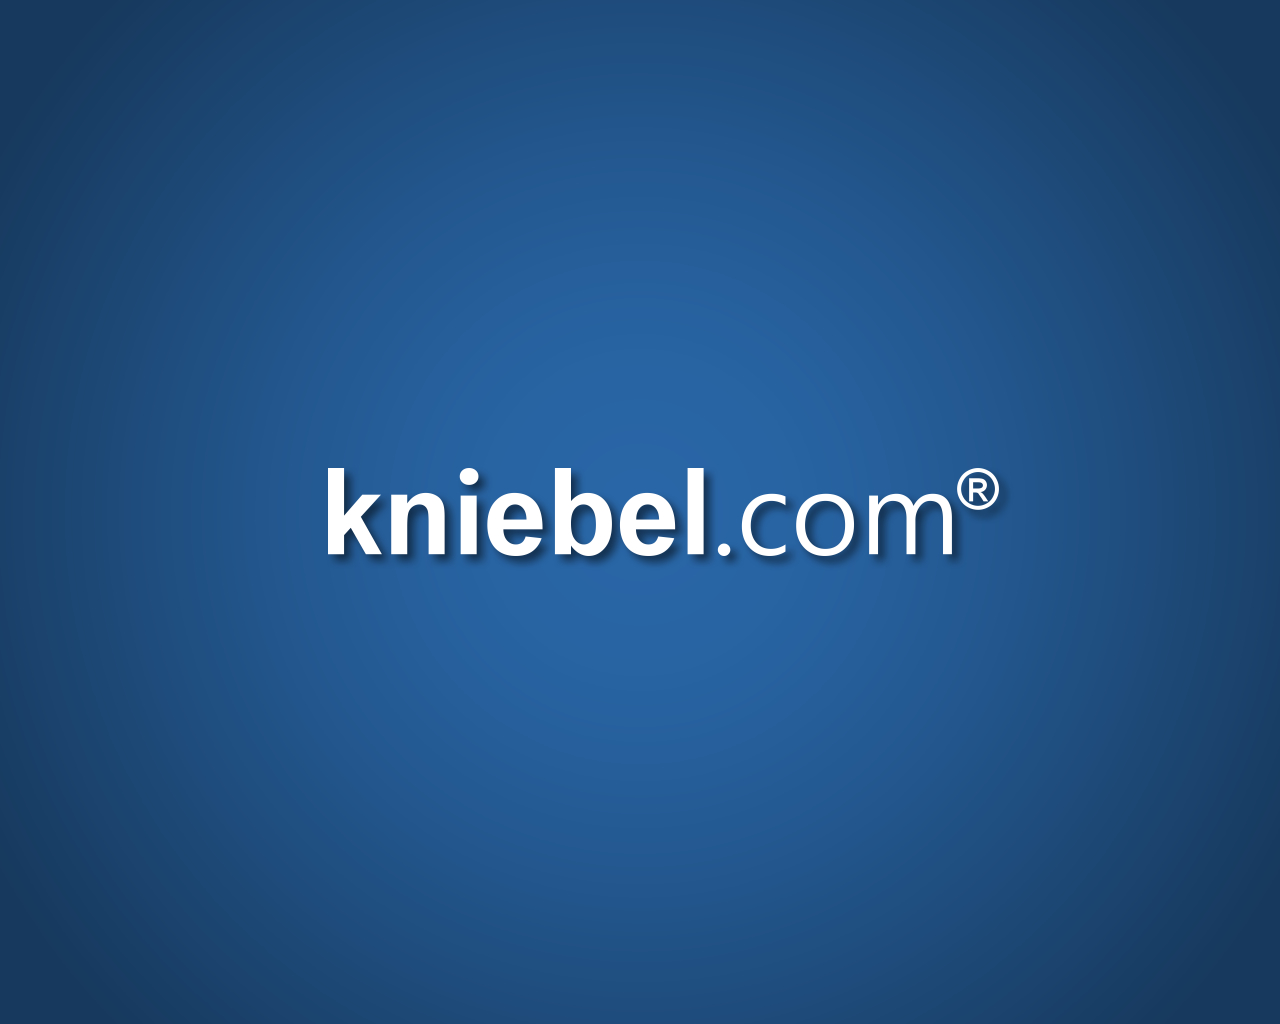 kniebel.com®